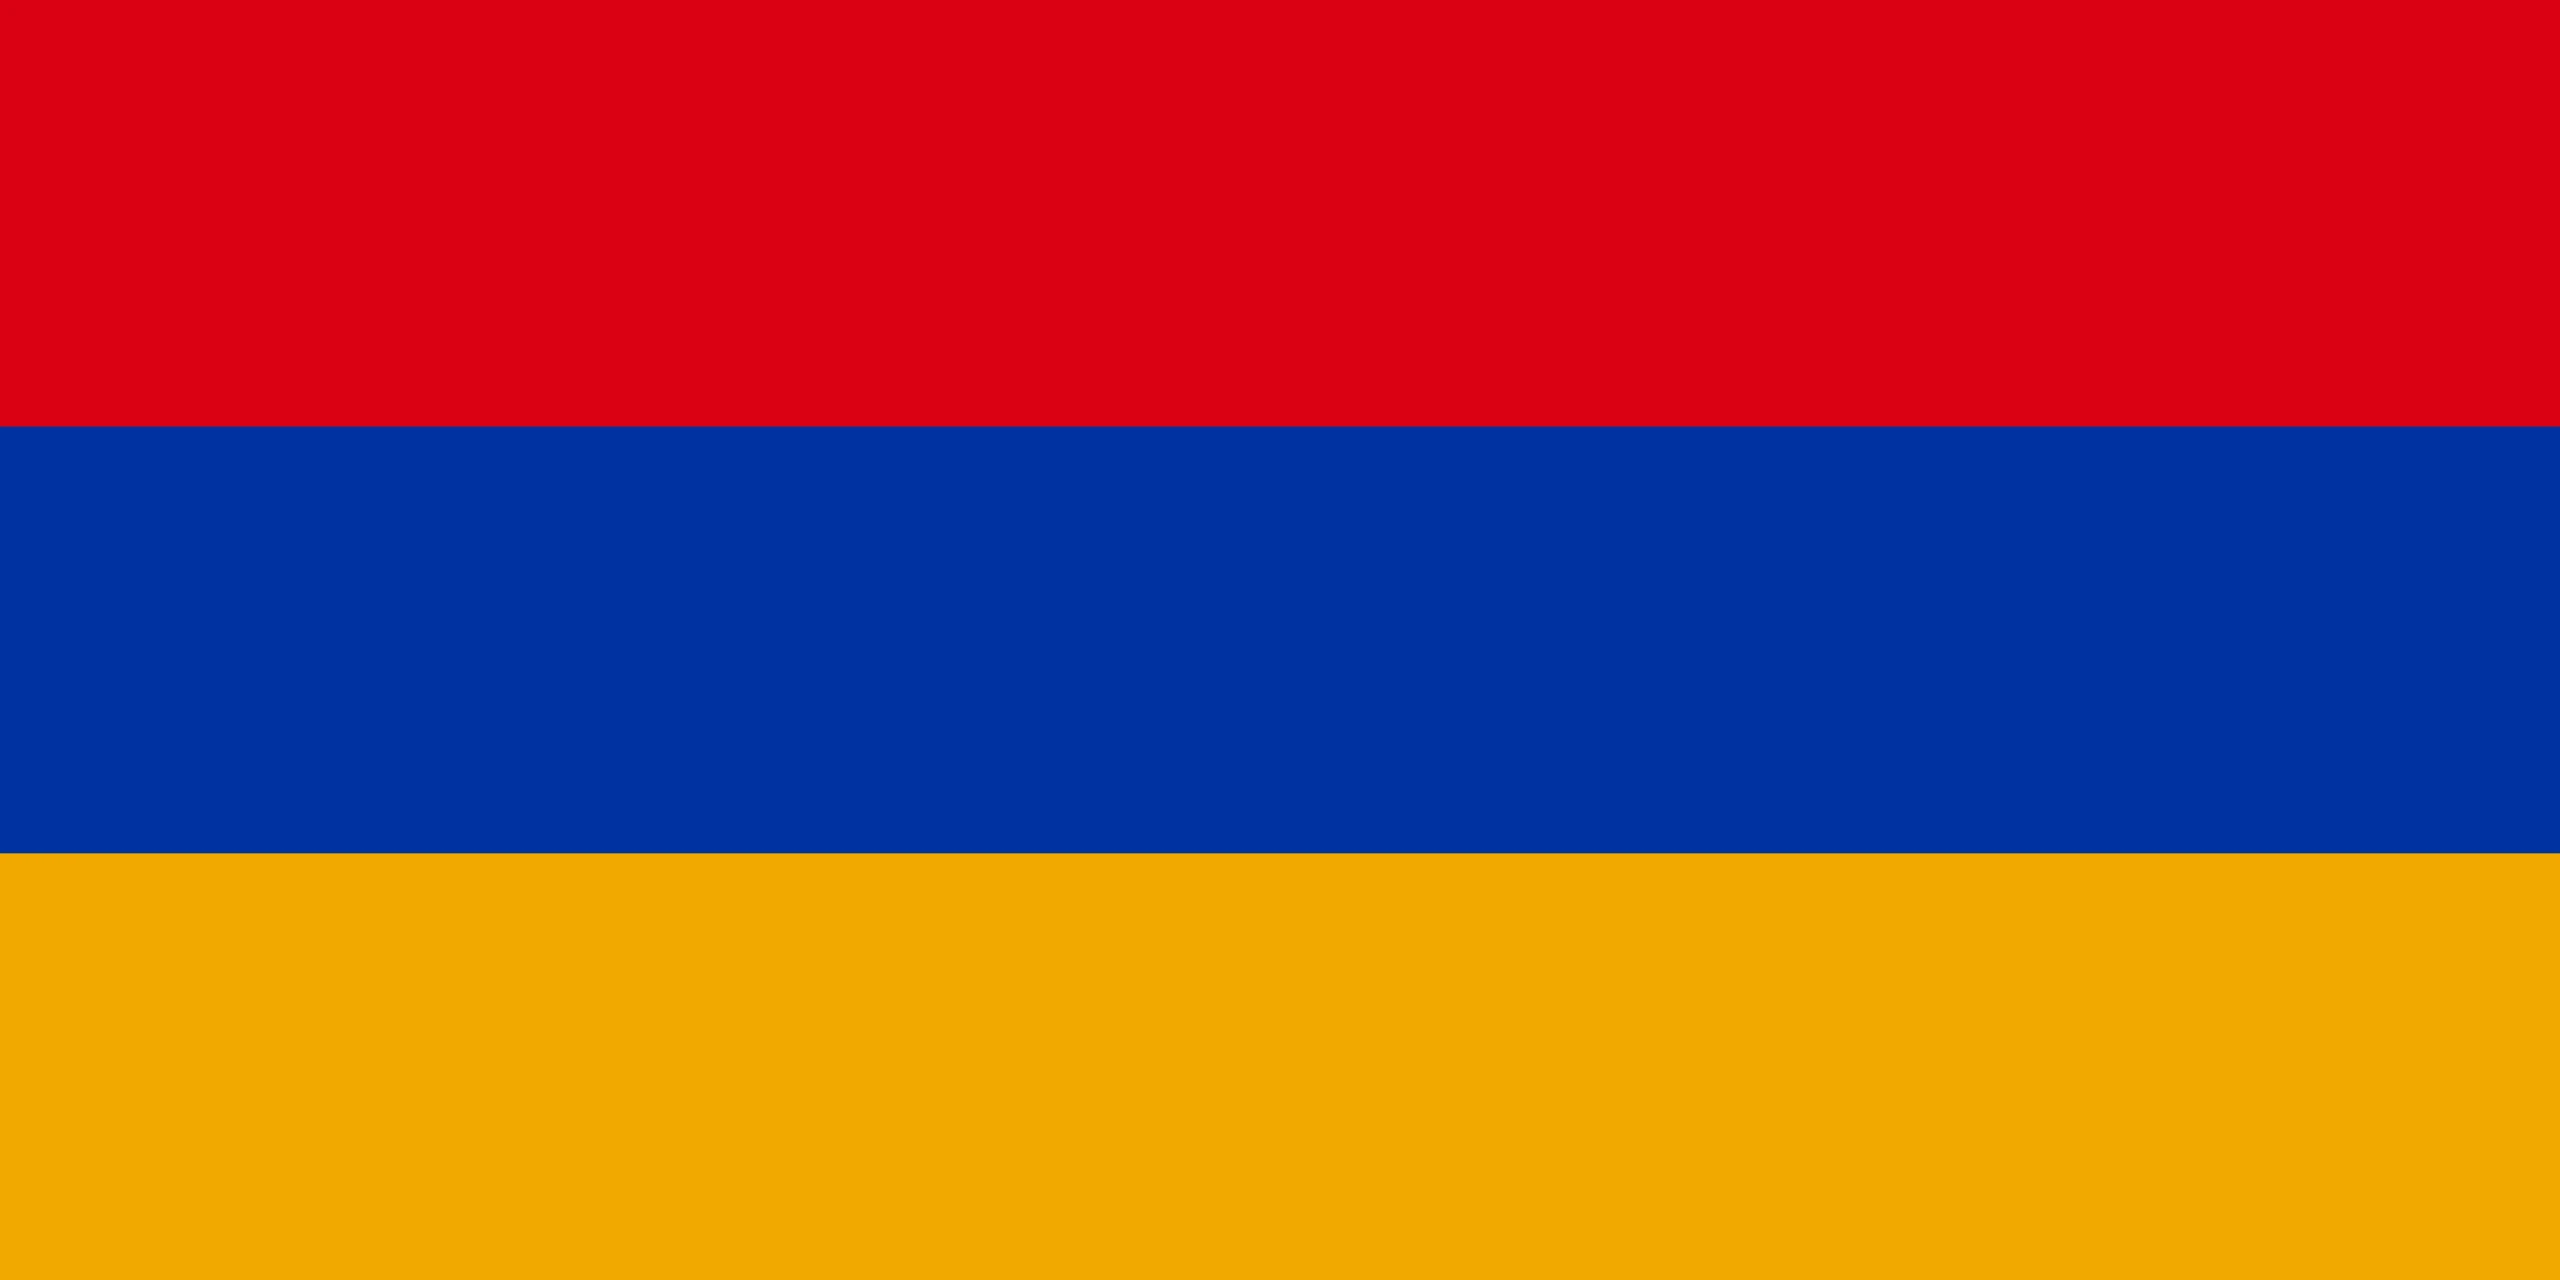 Armenia Flag Image